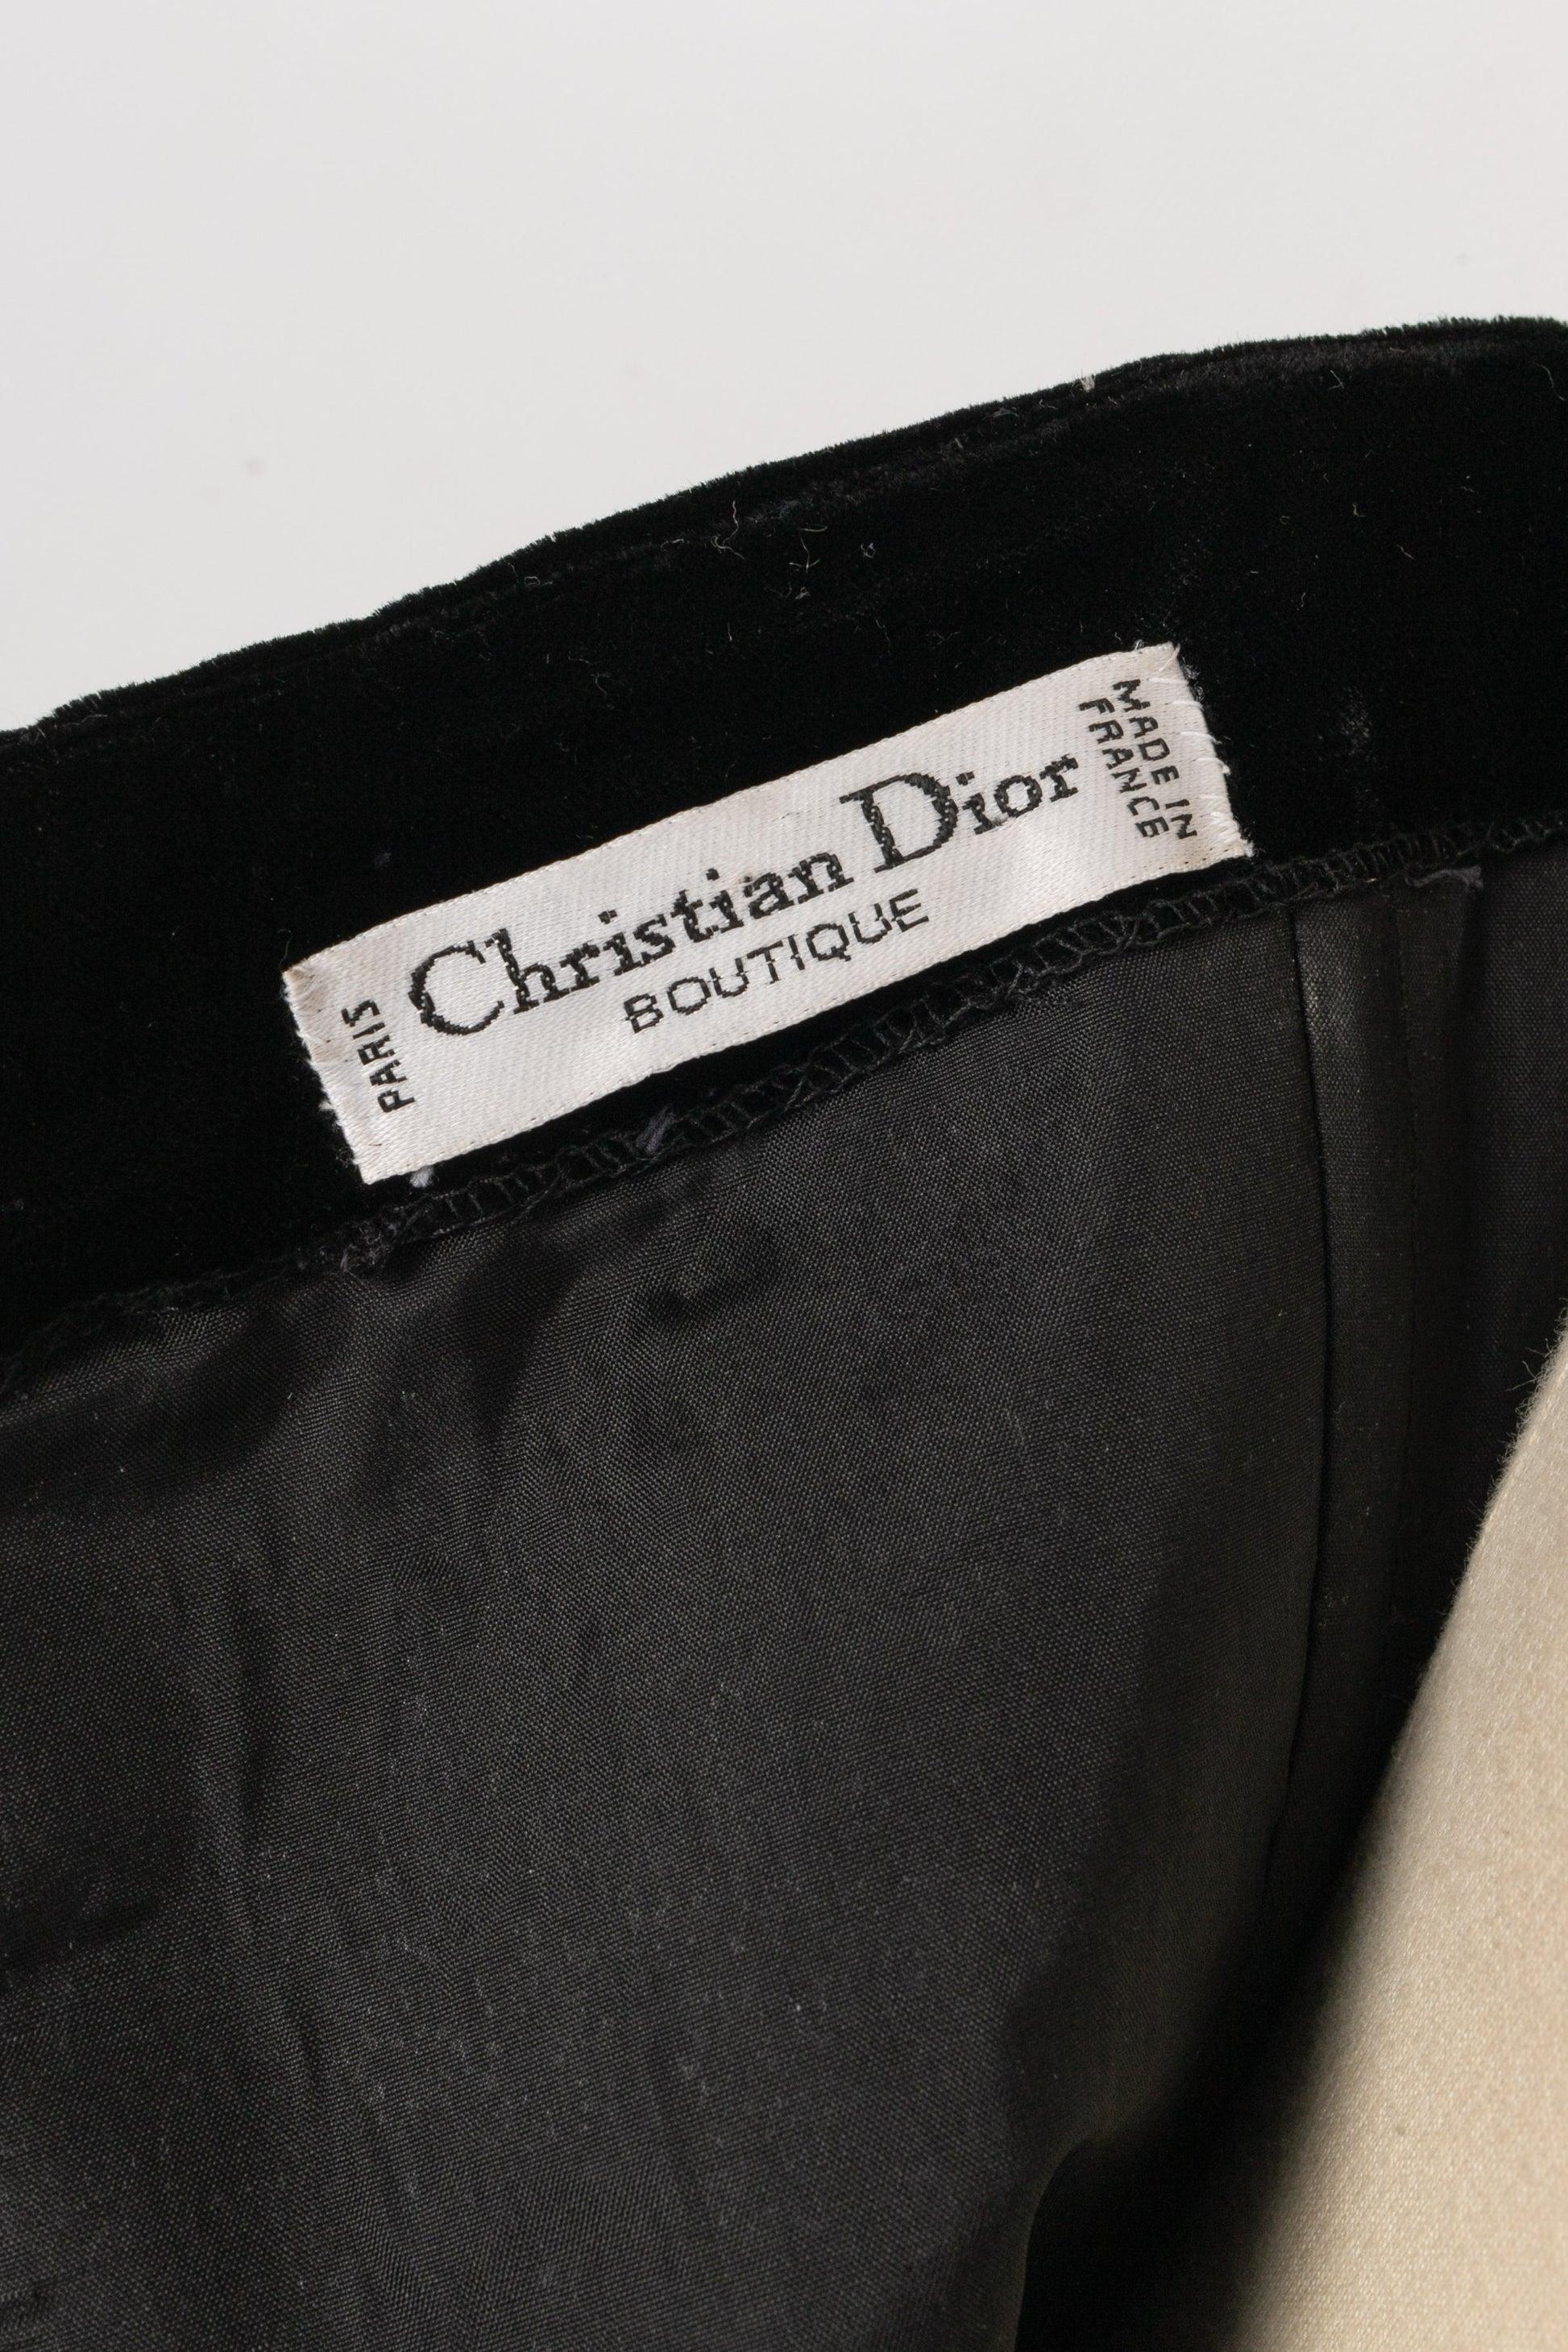 Dior Set Composed of Black Silk and Velvet Bustier Top For Sale 2